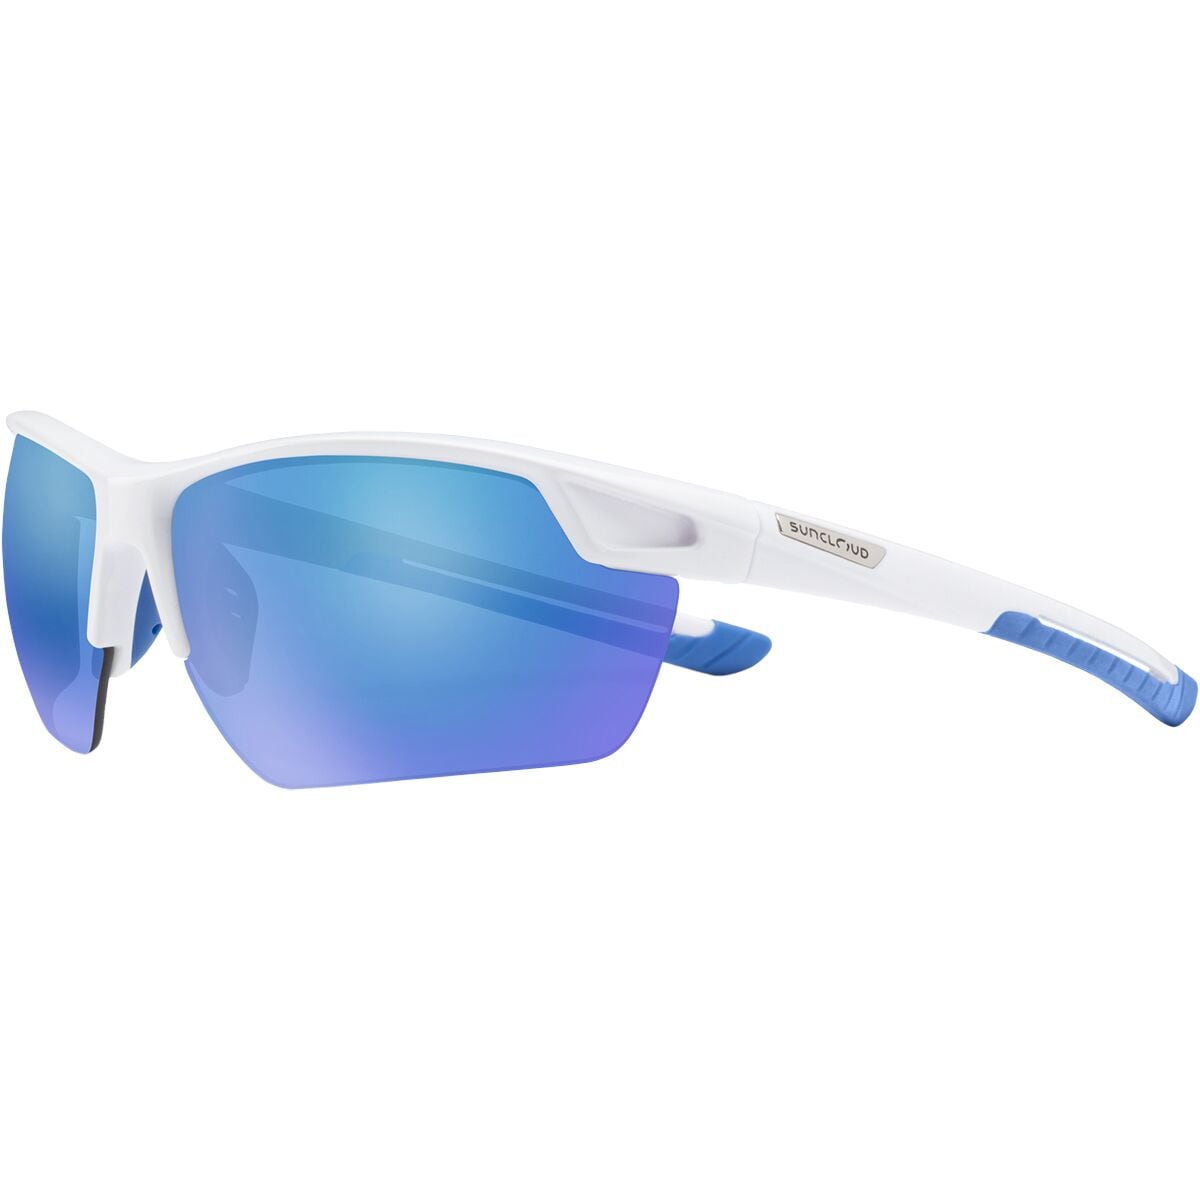 Поляризованные солнцезащитные очки contender Suncloud Polarized Optics, цвет white/polar blue2 mirror очки солнцезащитные stylemark polarized l1475c